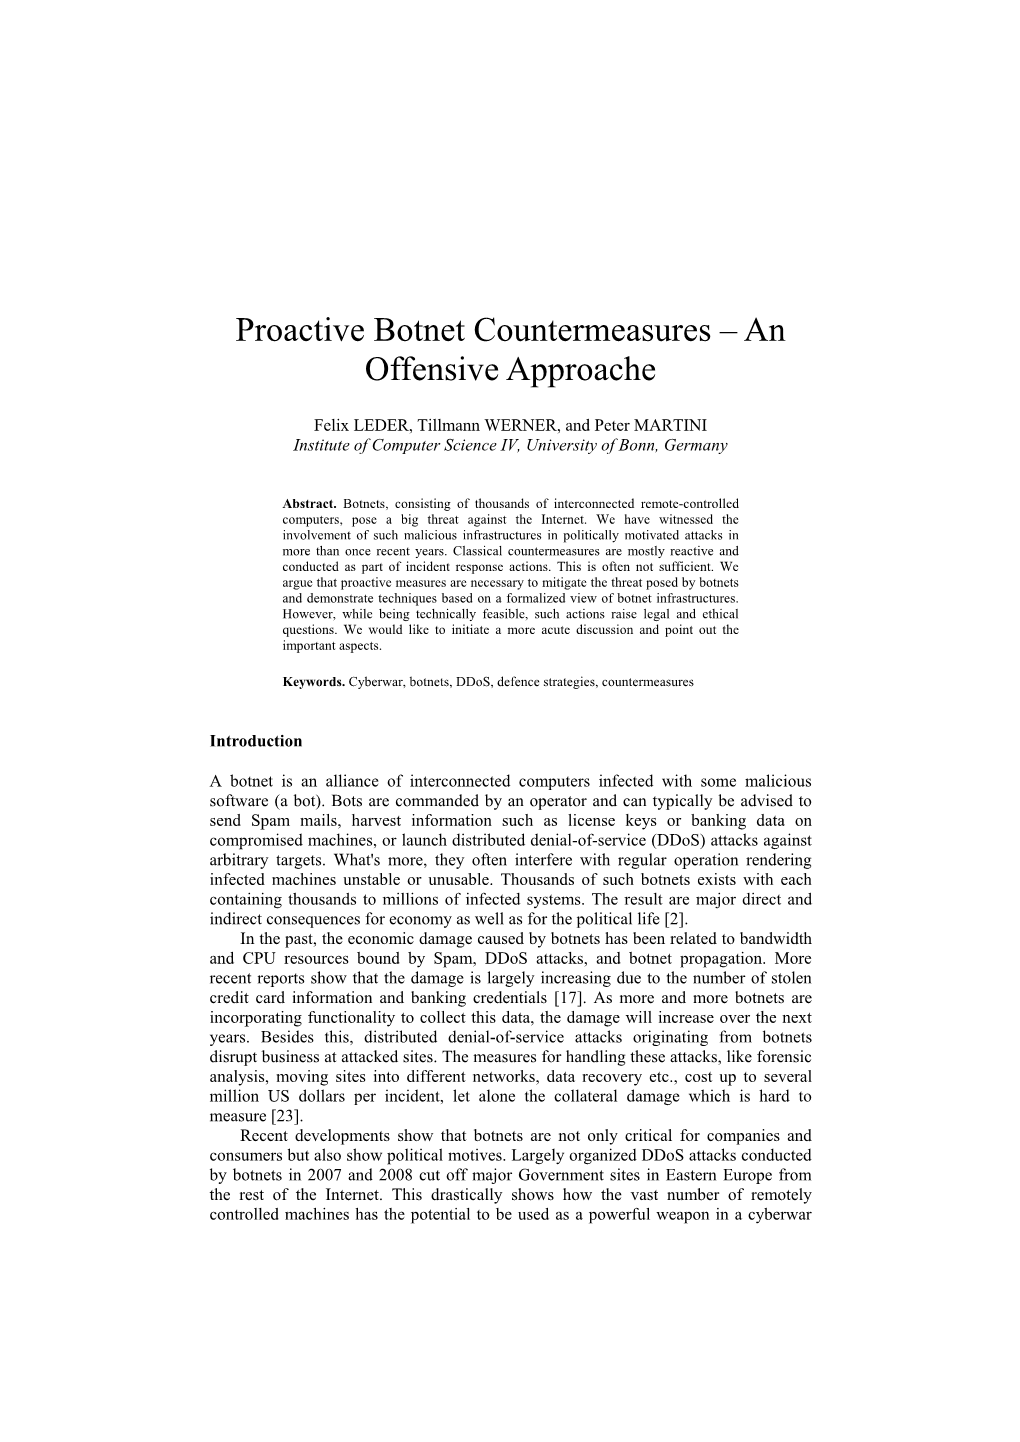 Proactive Botnet Countermeasures – an Offensive Approache